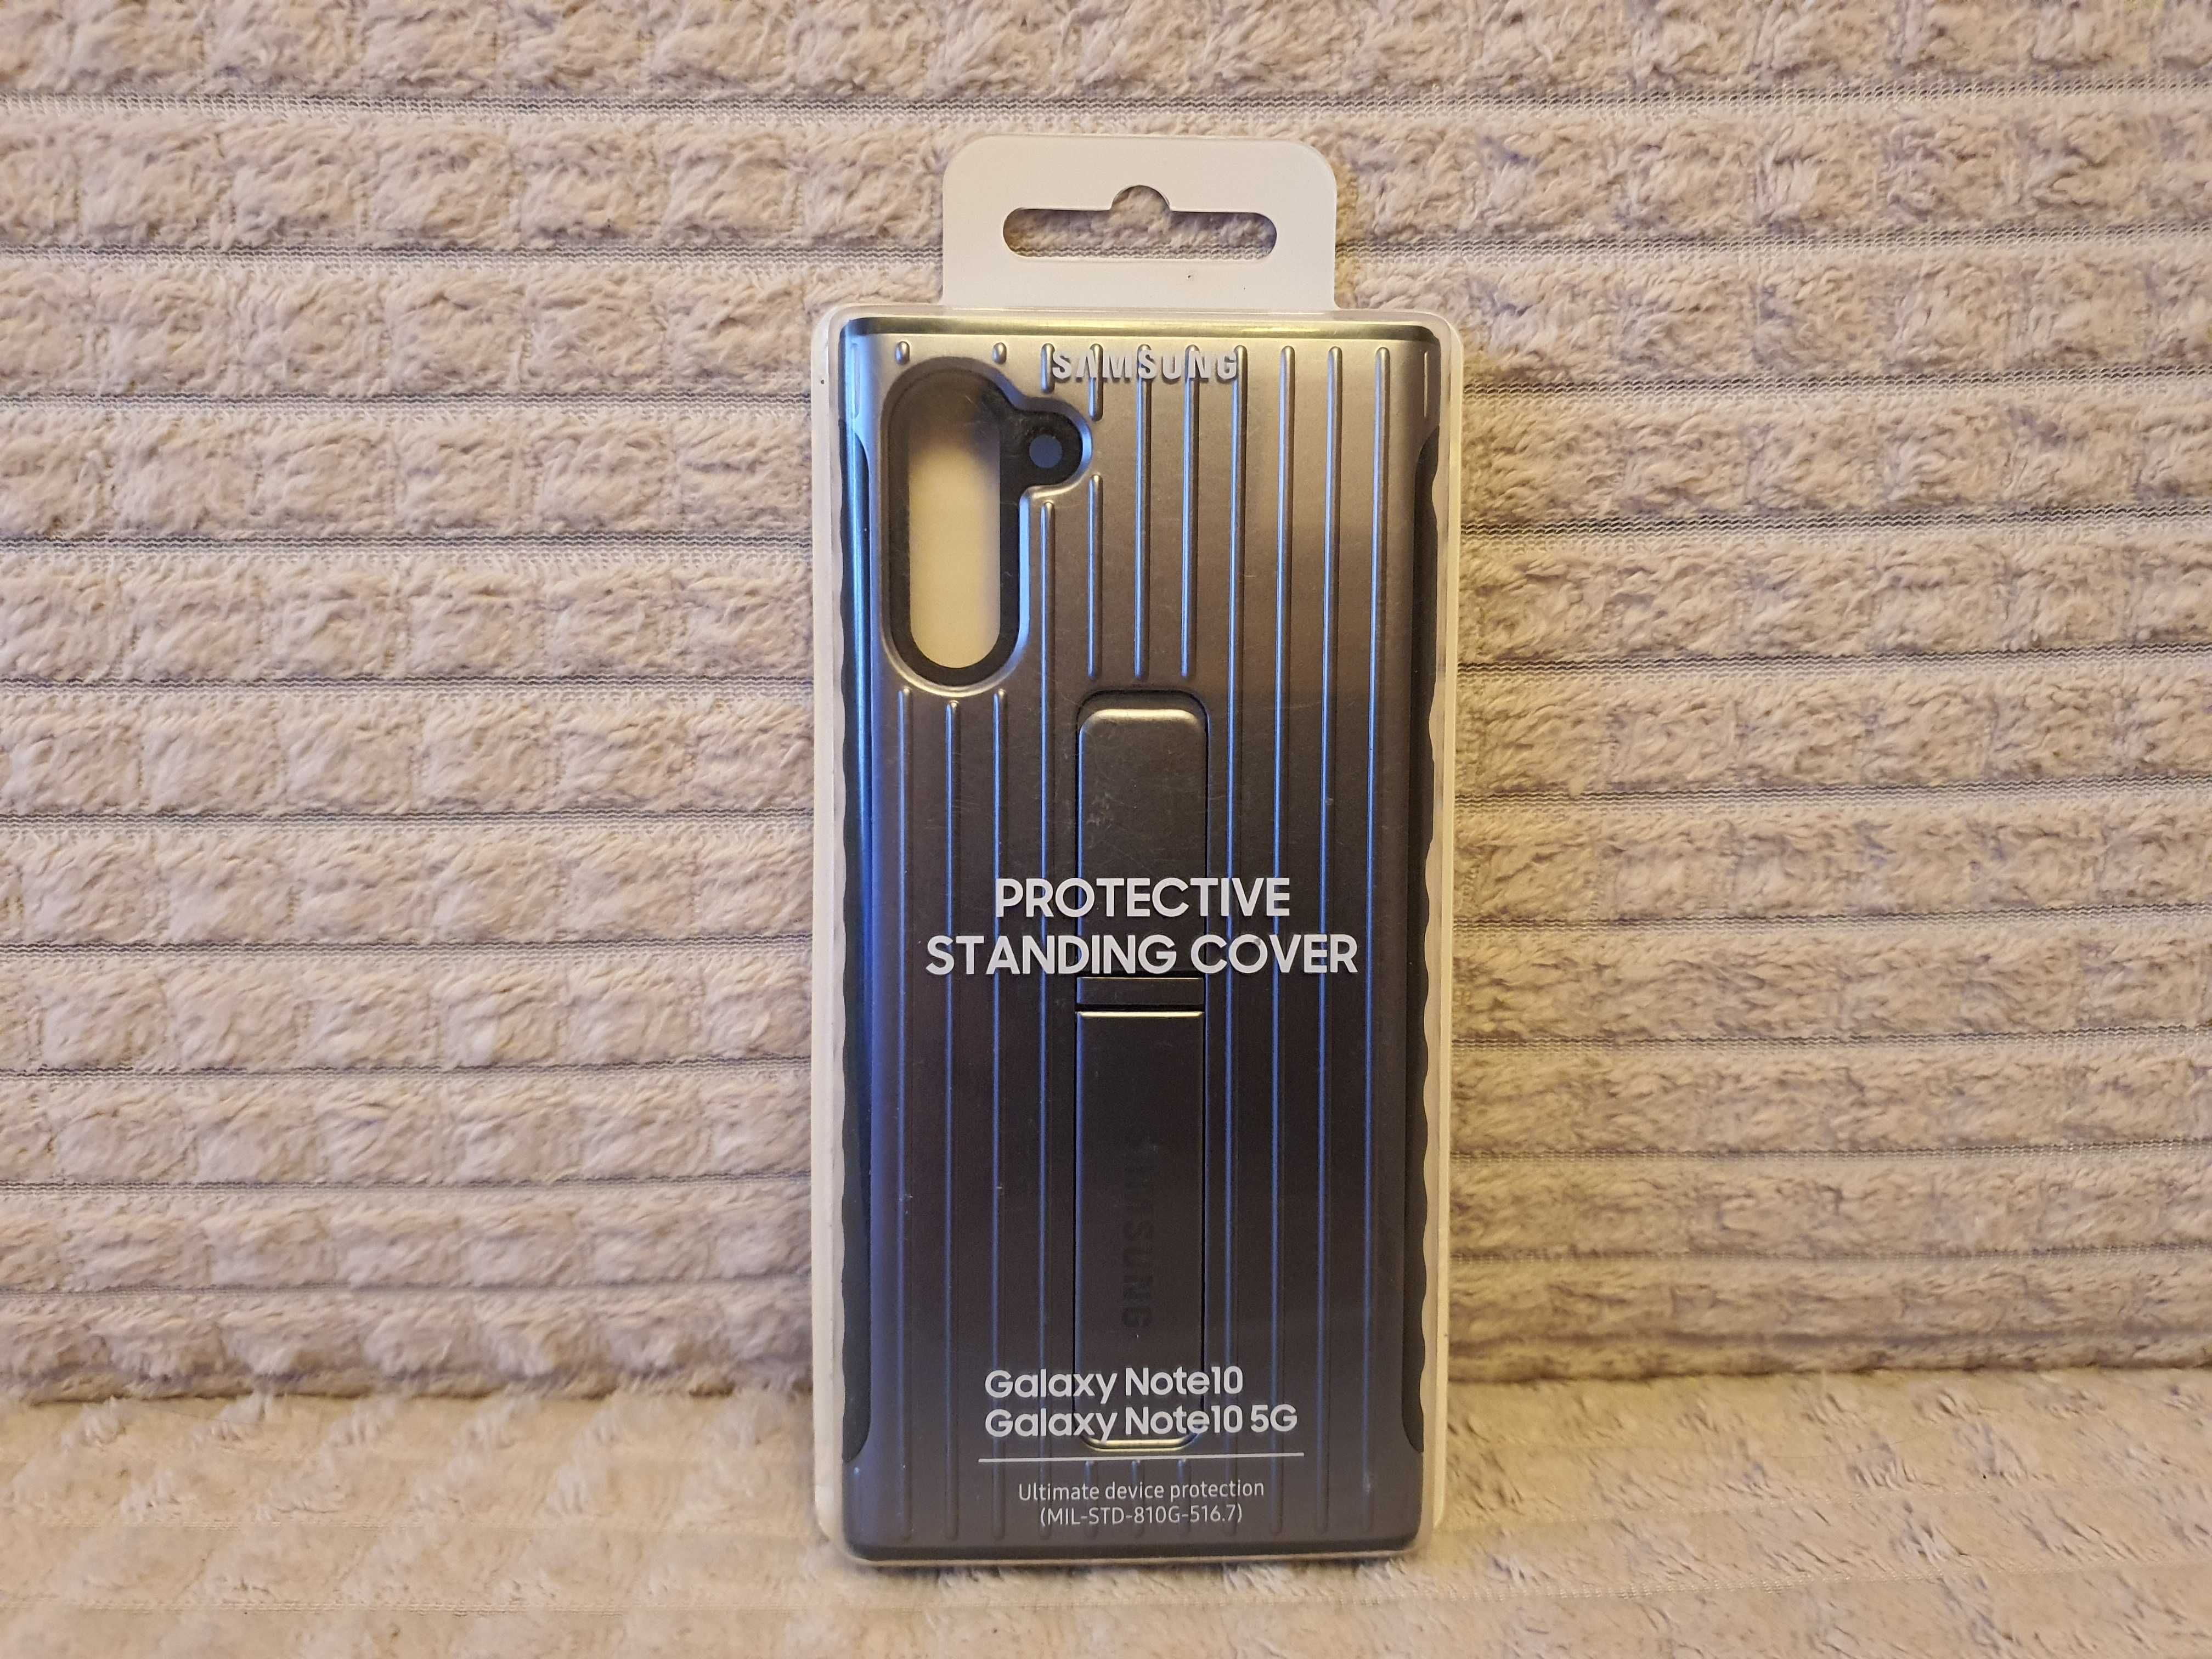 Husa Samsung Note 10 protectiv standing cover, originala, sigilata